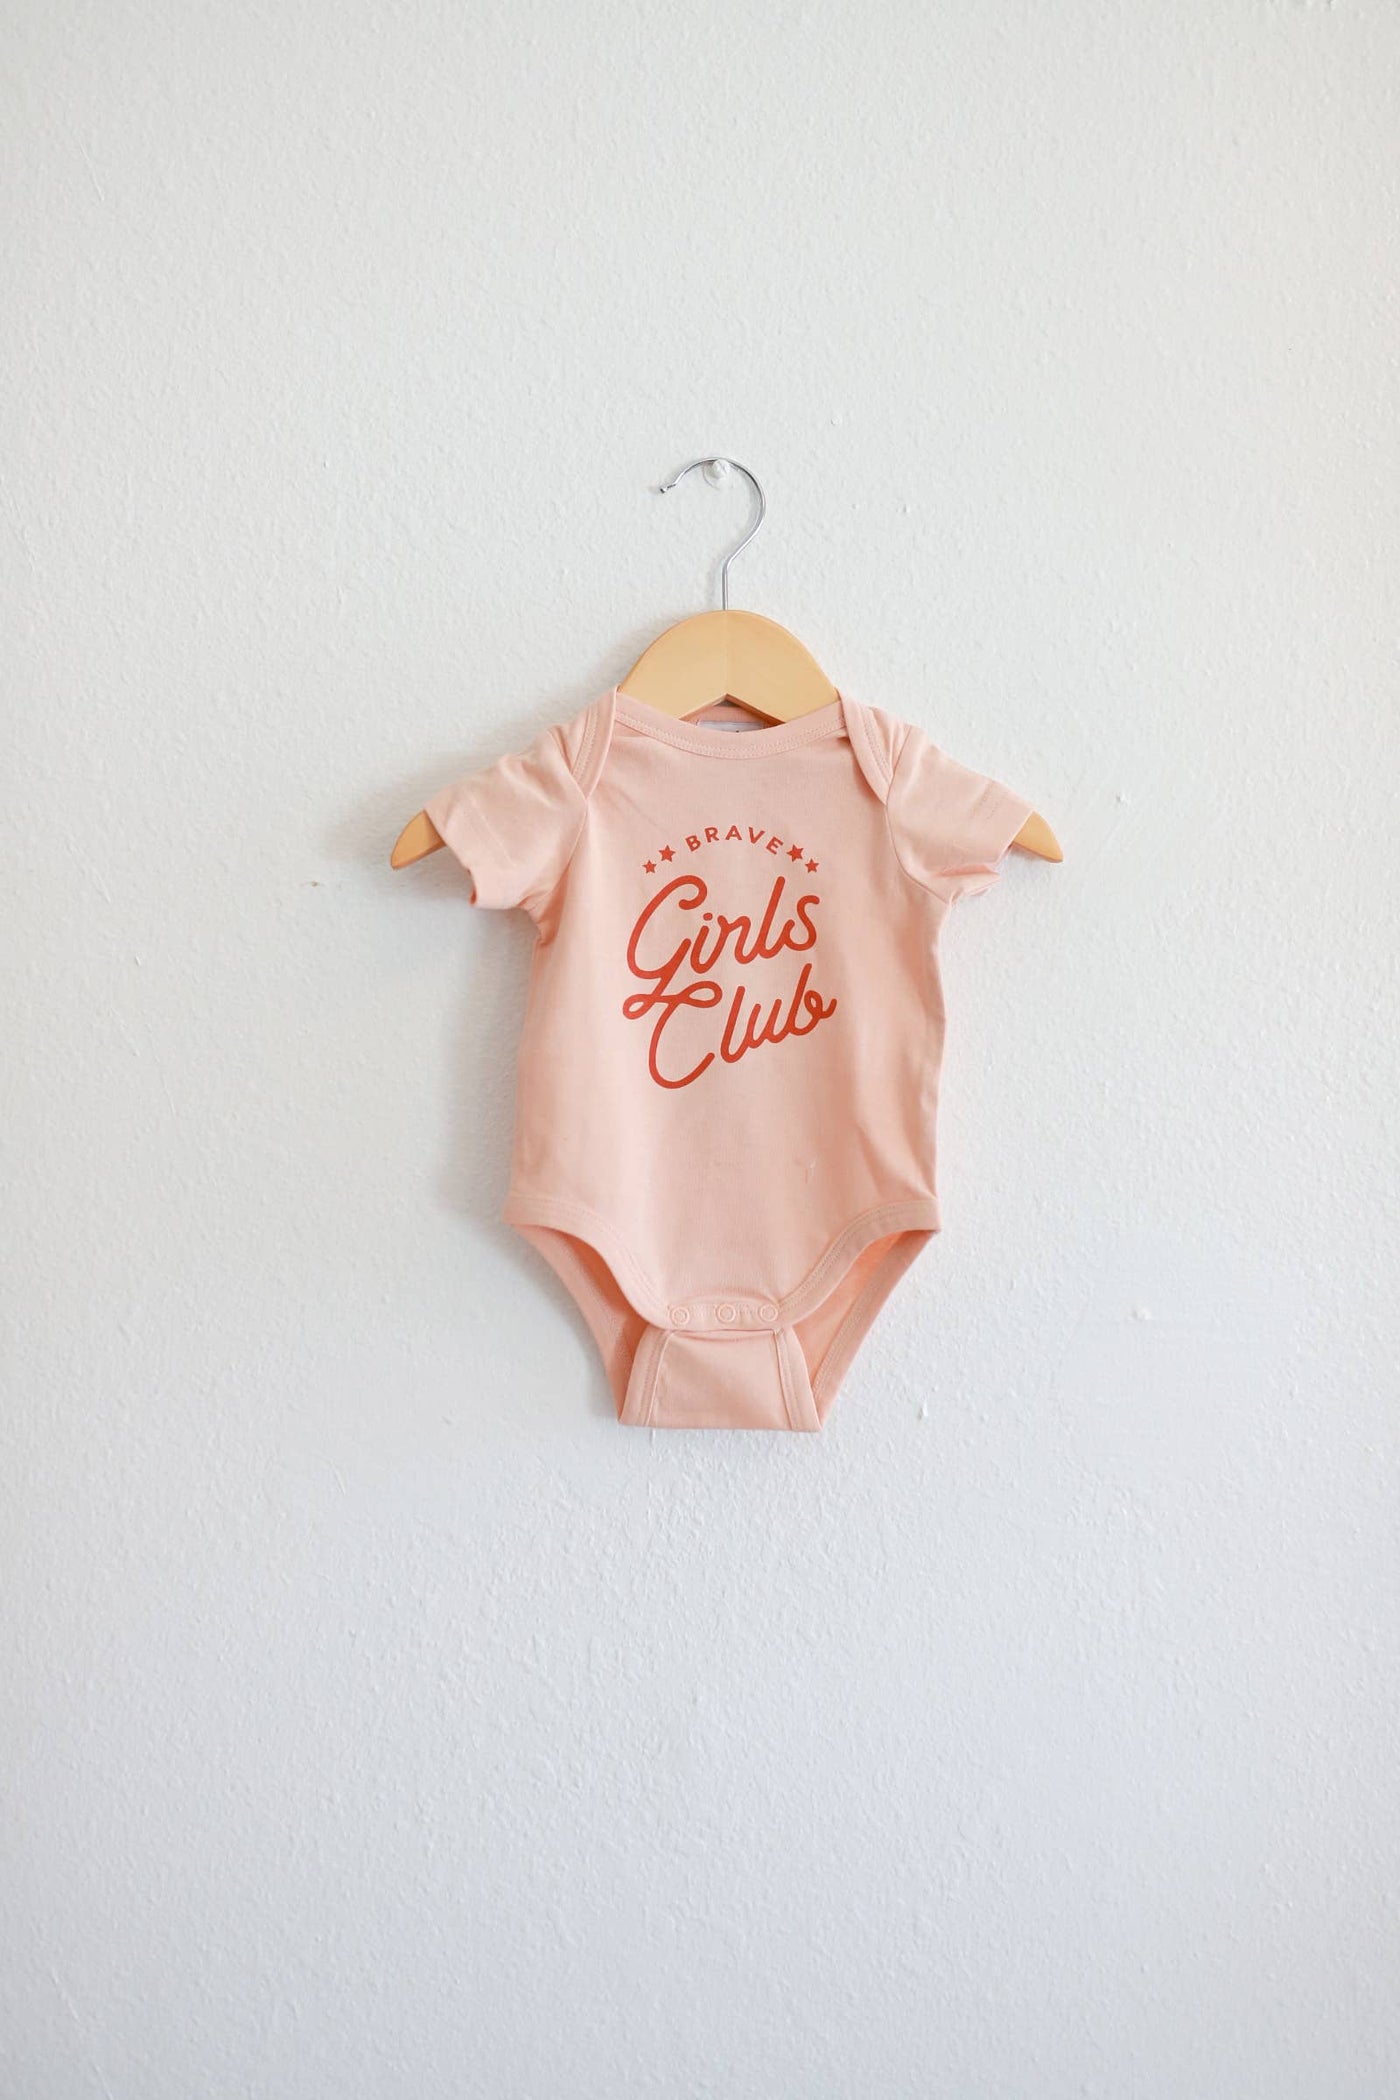 Brave Girls Club Baby Onesie, Baby Bodysuit, Baby Gift - 18 Month